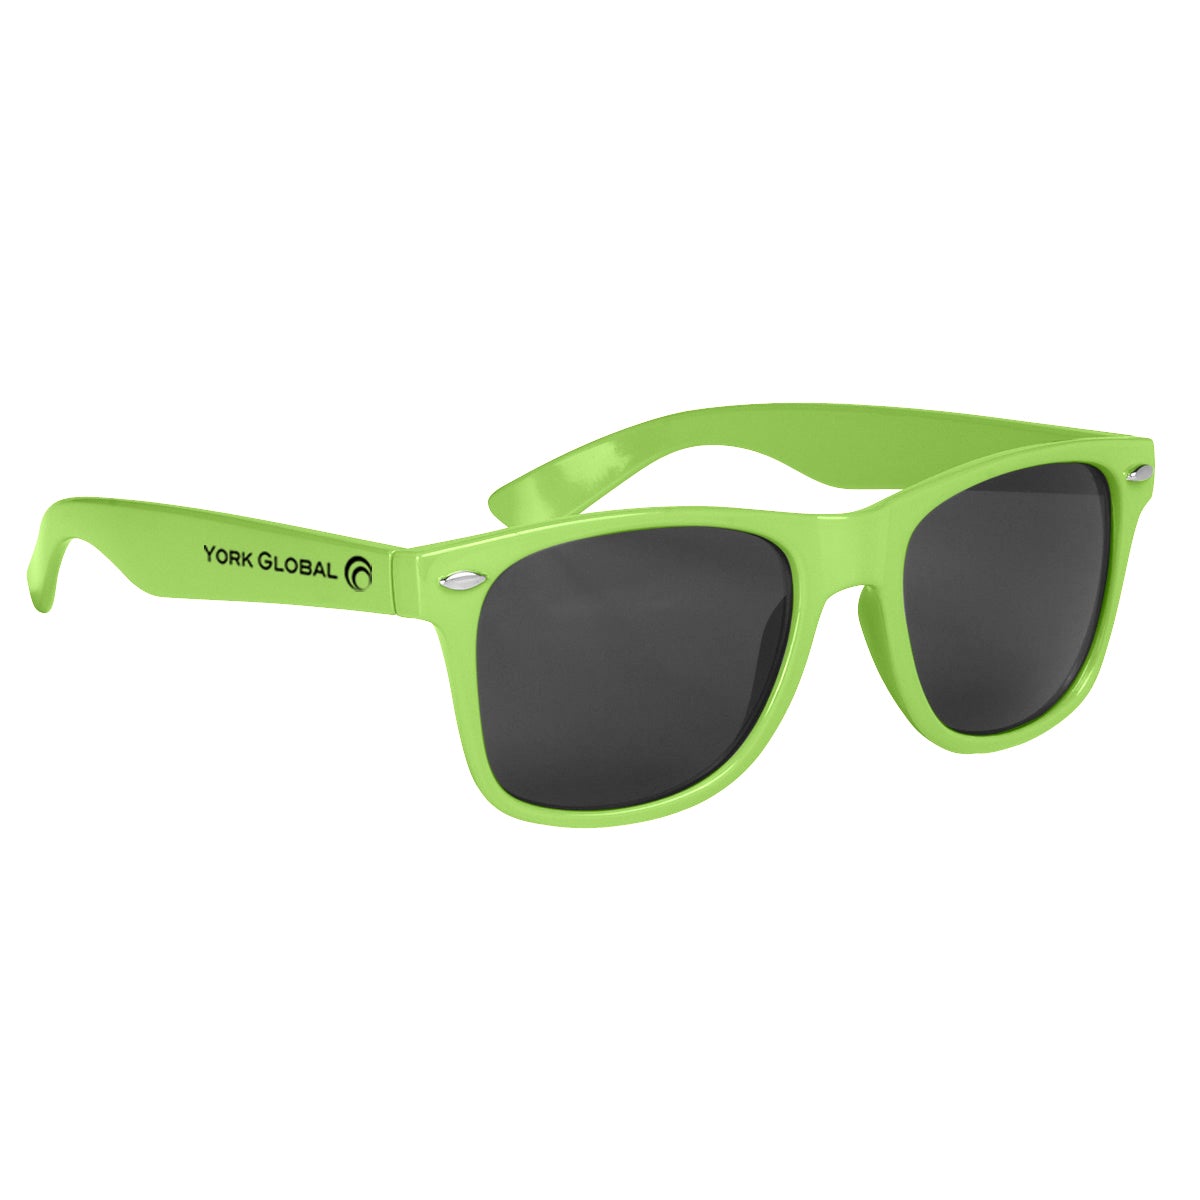 Malibu Sunglasses Sunglasses Hit Promo Lime Green Single Color 